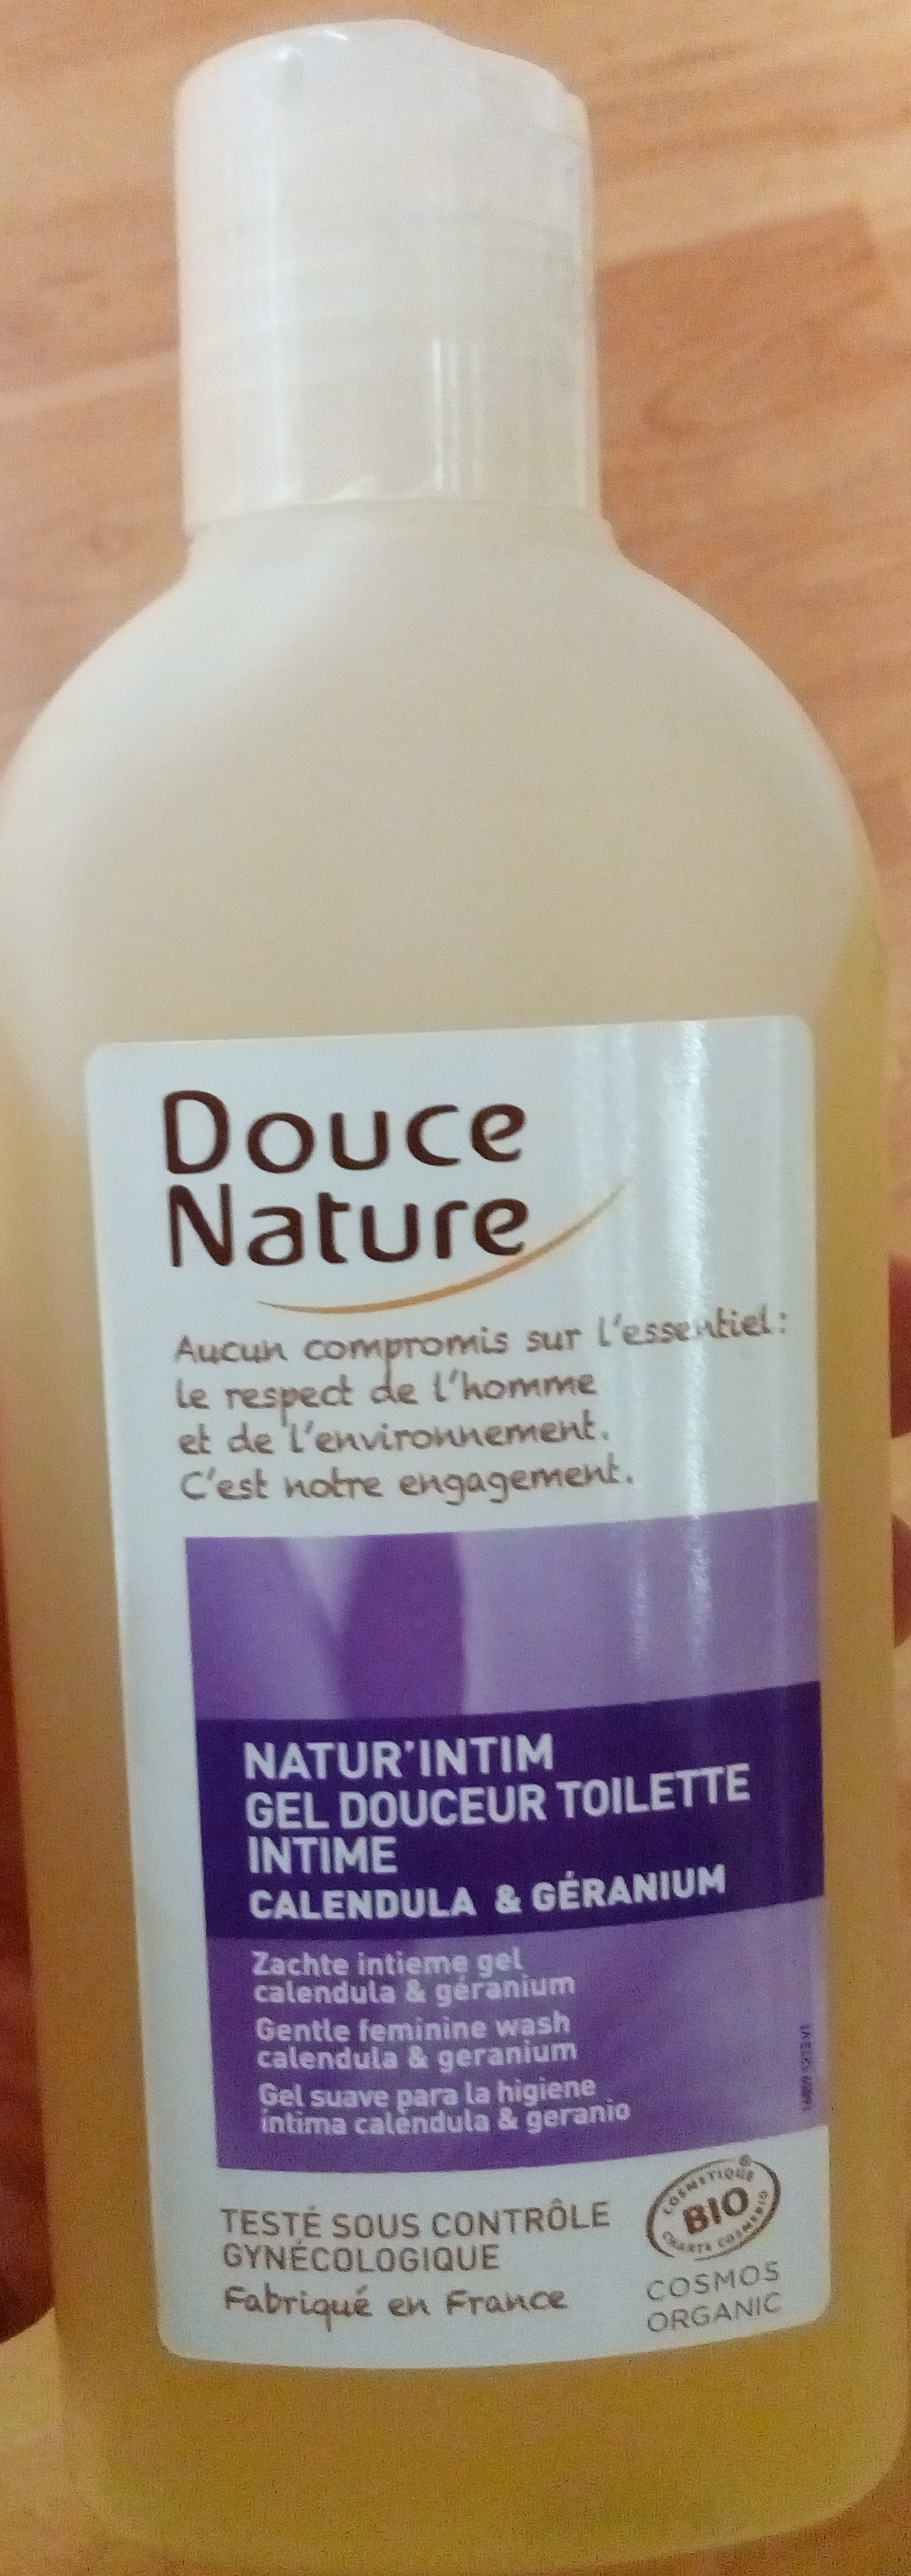 Natur'Intim Gel douceur Toilette Intime - Produto - fr